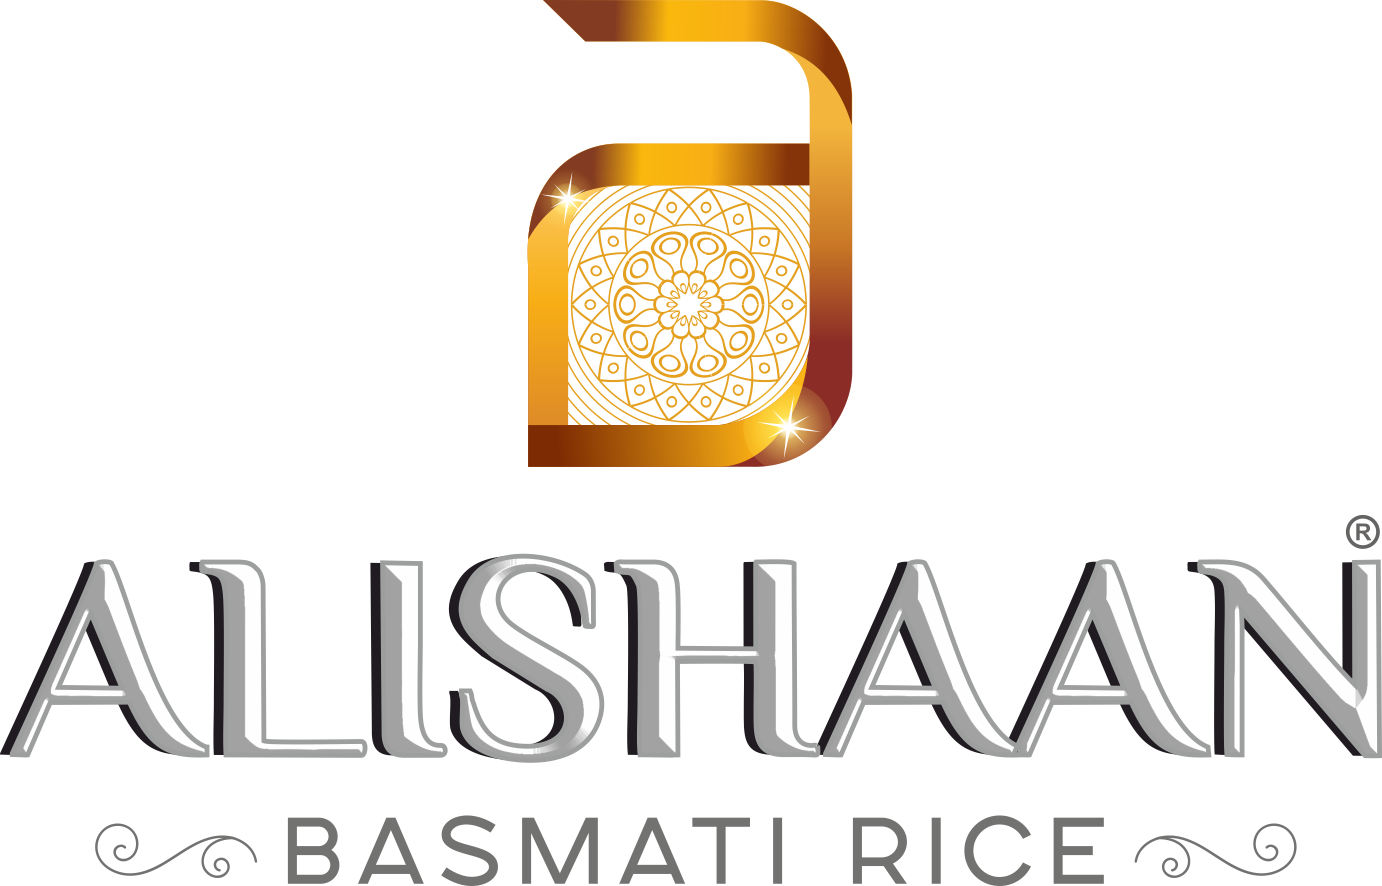 Alishaan Basmati Rice - Perfect Basmati Rice Australia